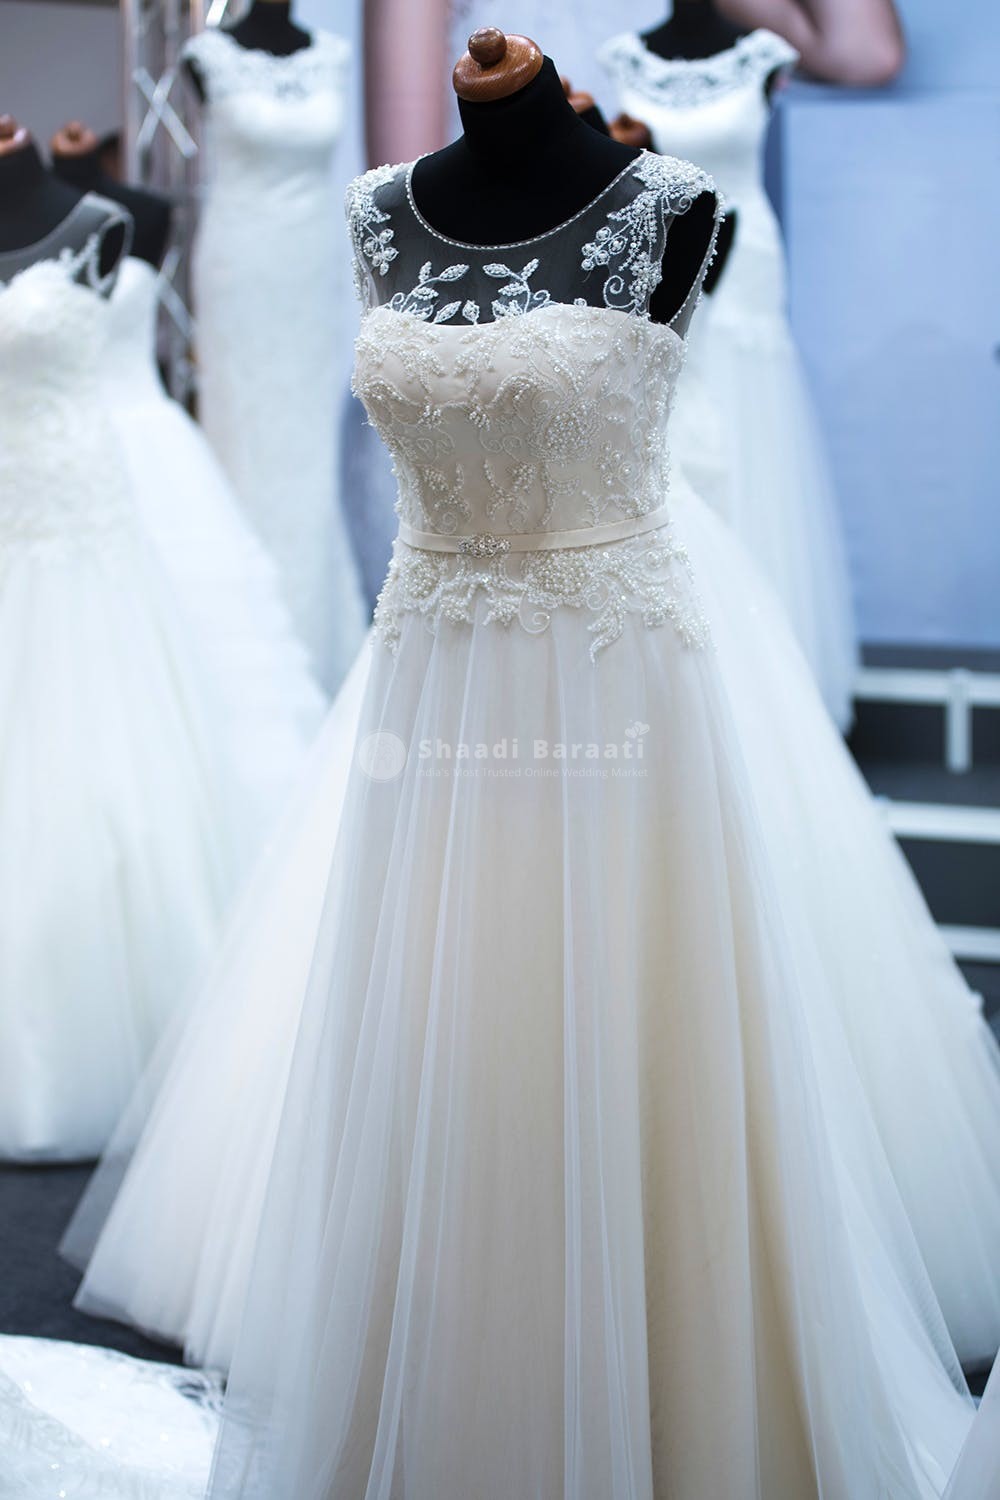 Ashnah Bridals - Christian Wedding Gowns - Lehenga - Ranga Reddy City -  Weddingwire.in